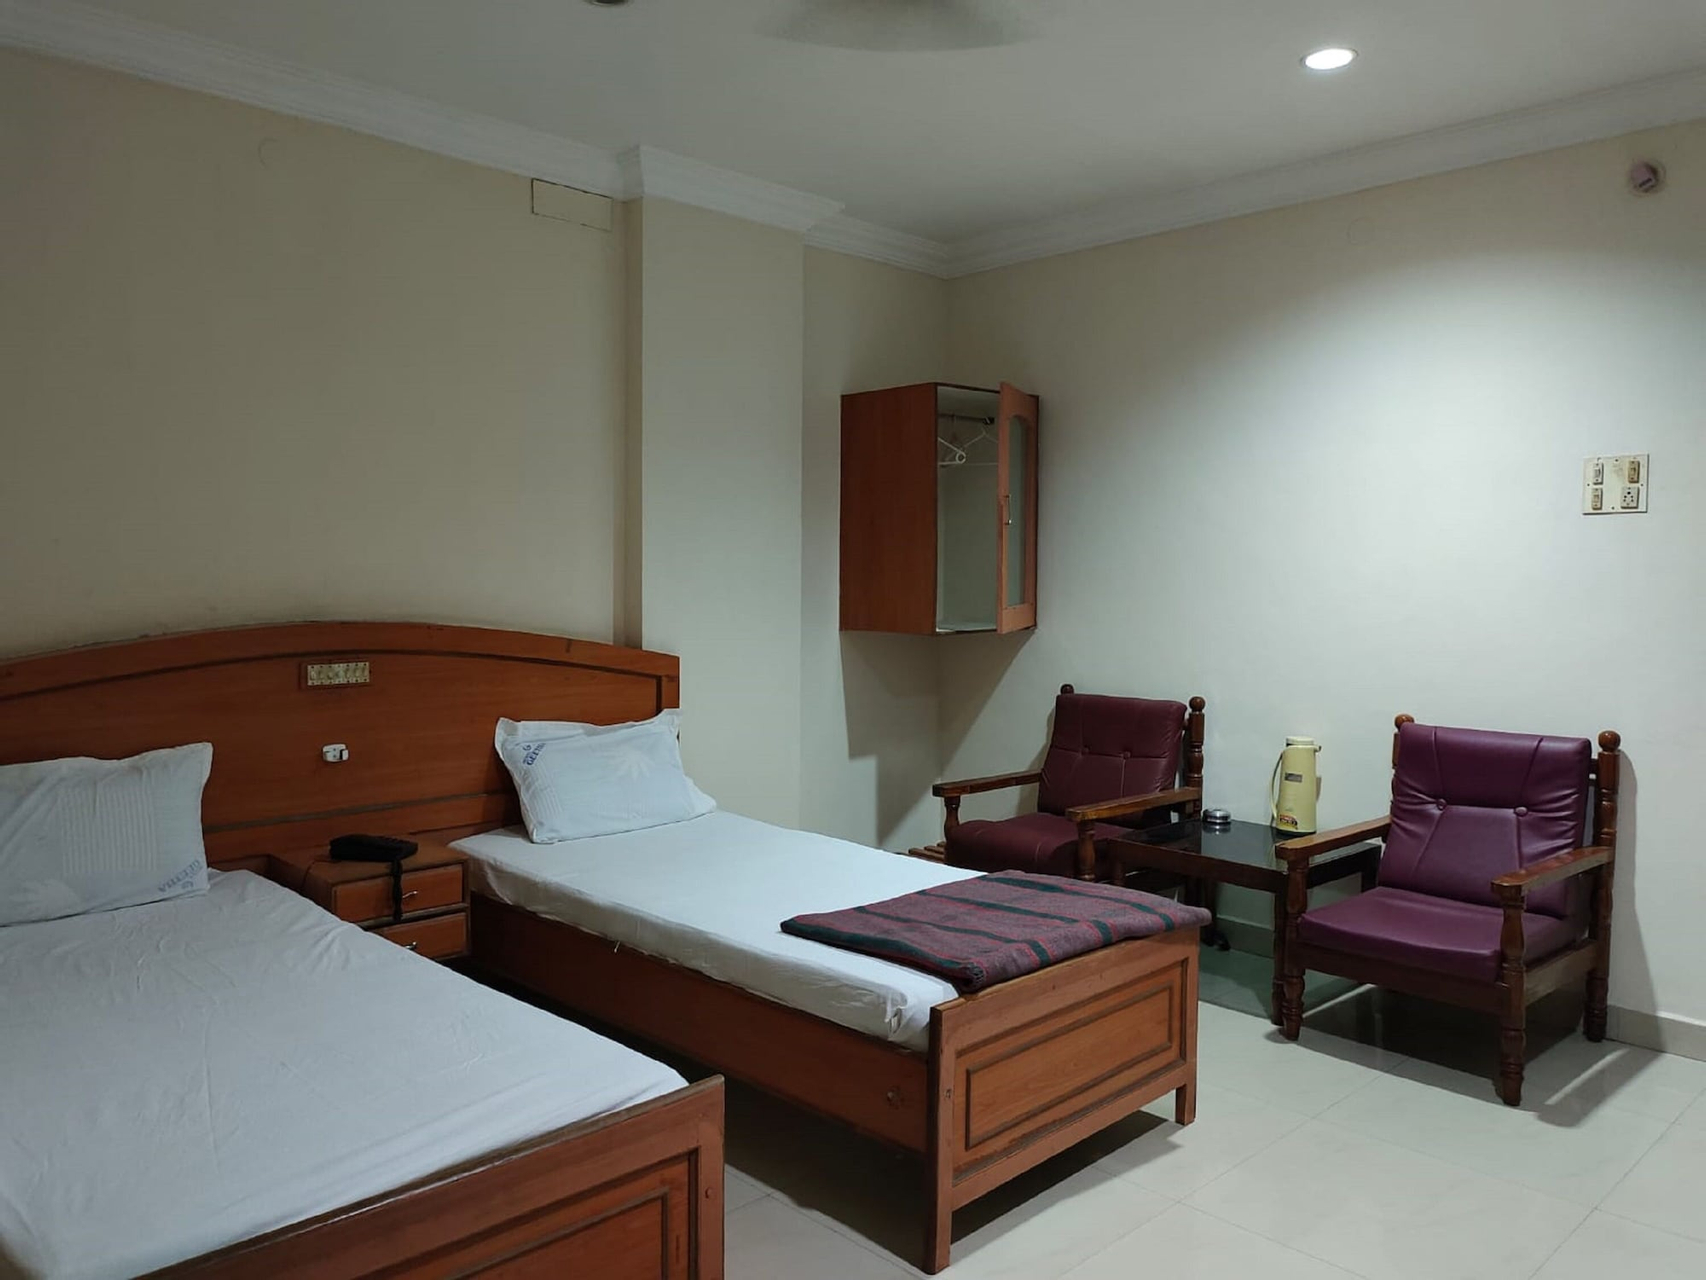 Hotel Geetha International, Thoothukkudi